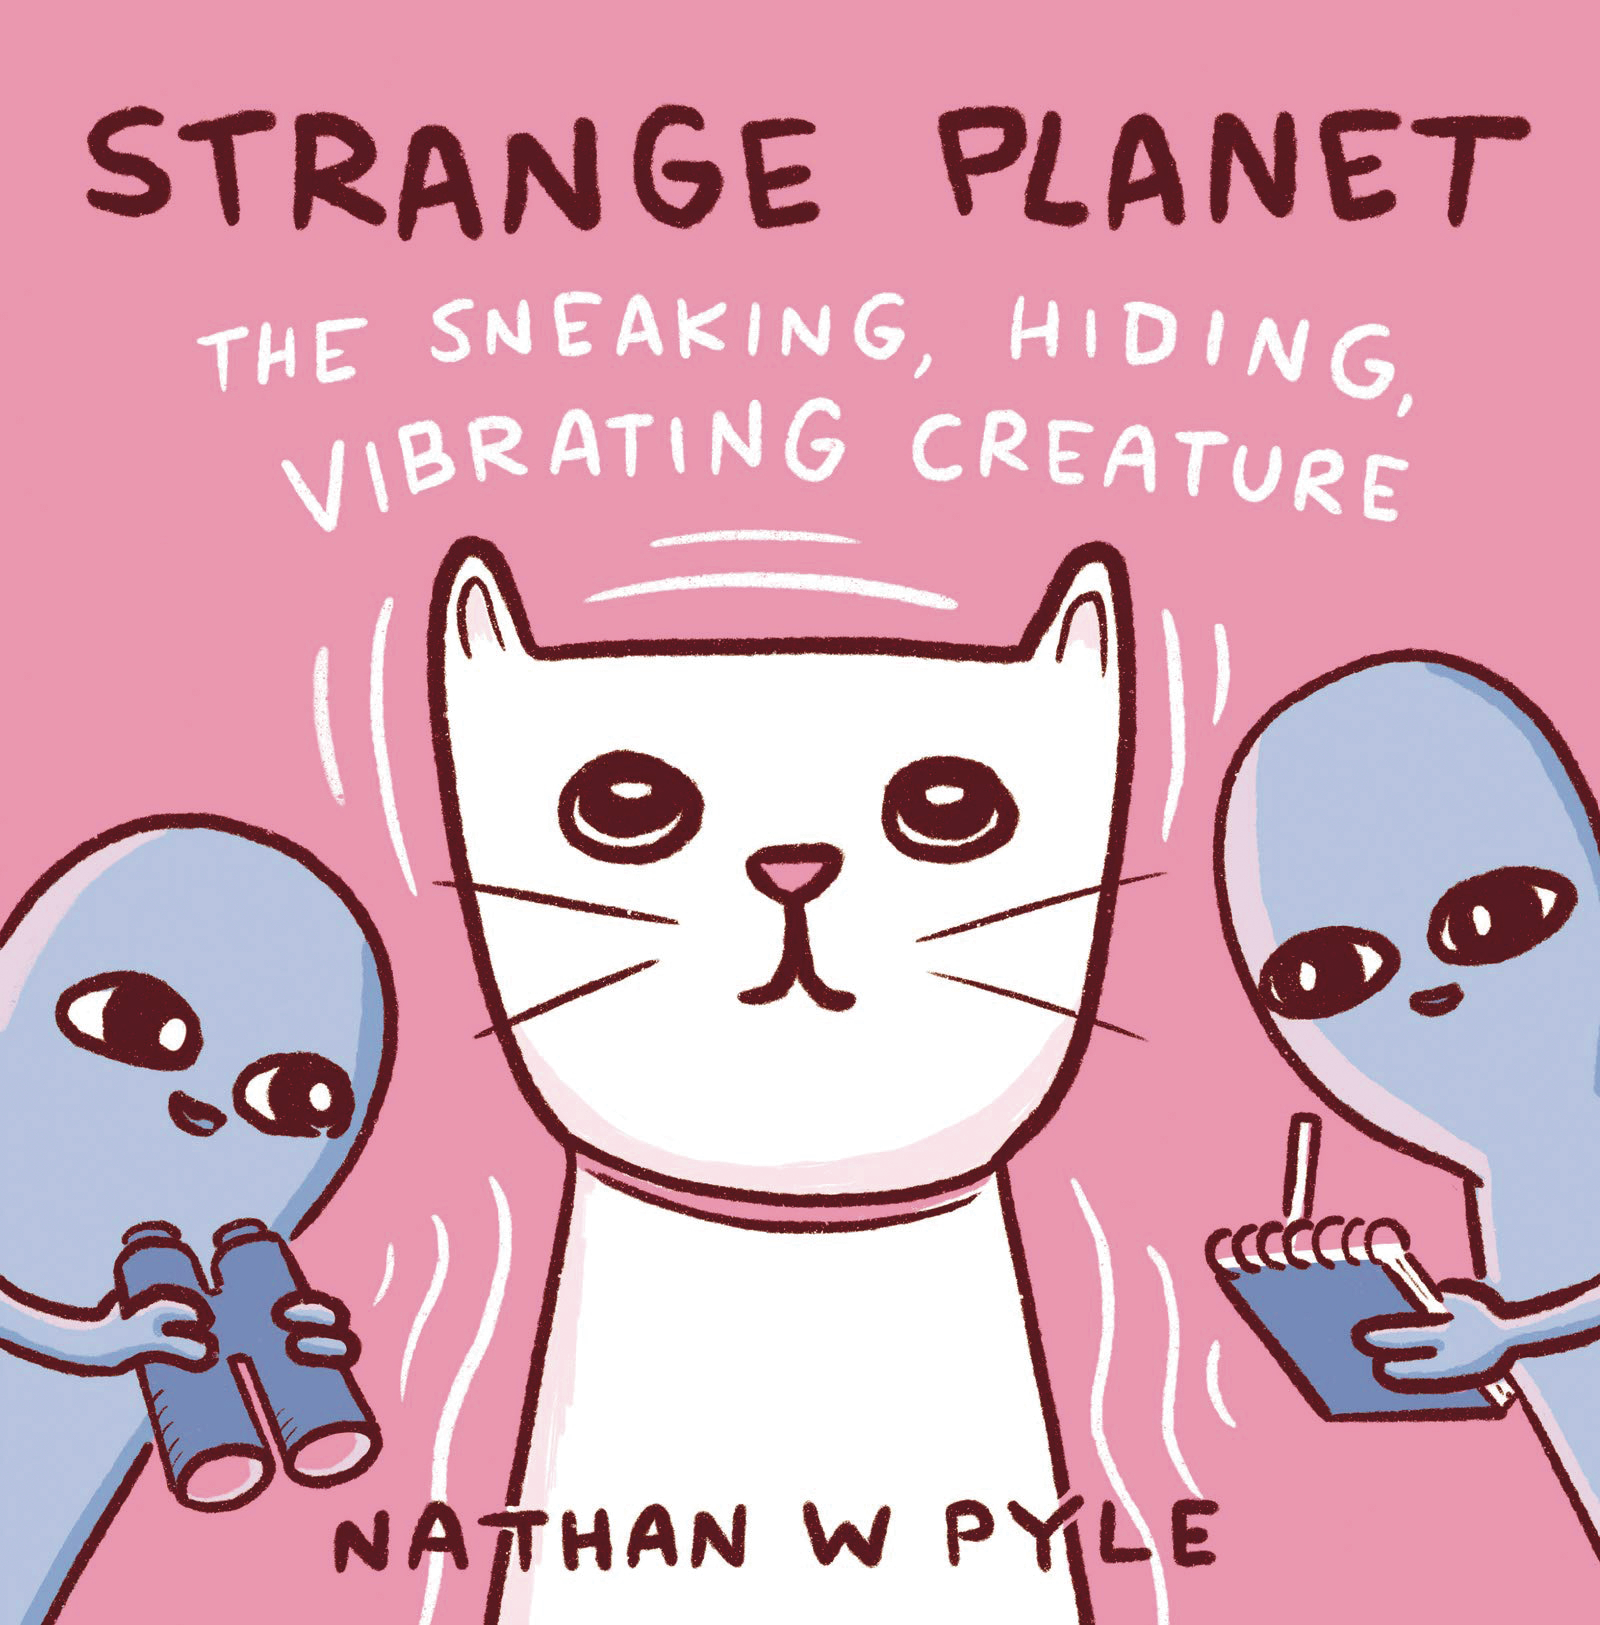 Strange Planet Sneaking Hiding Vibrating Creature